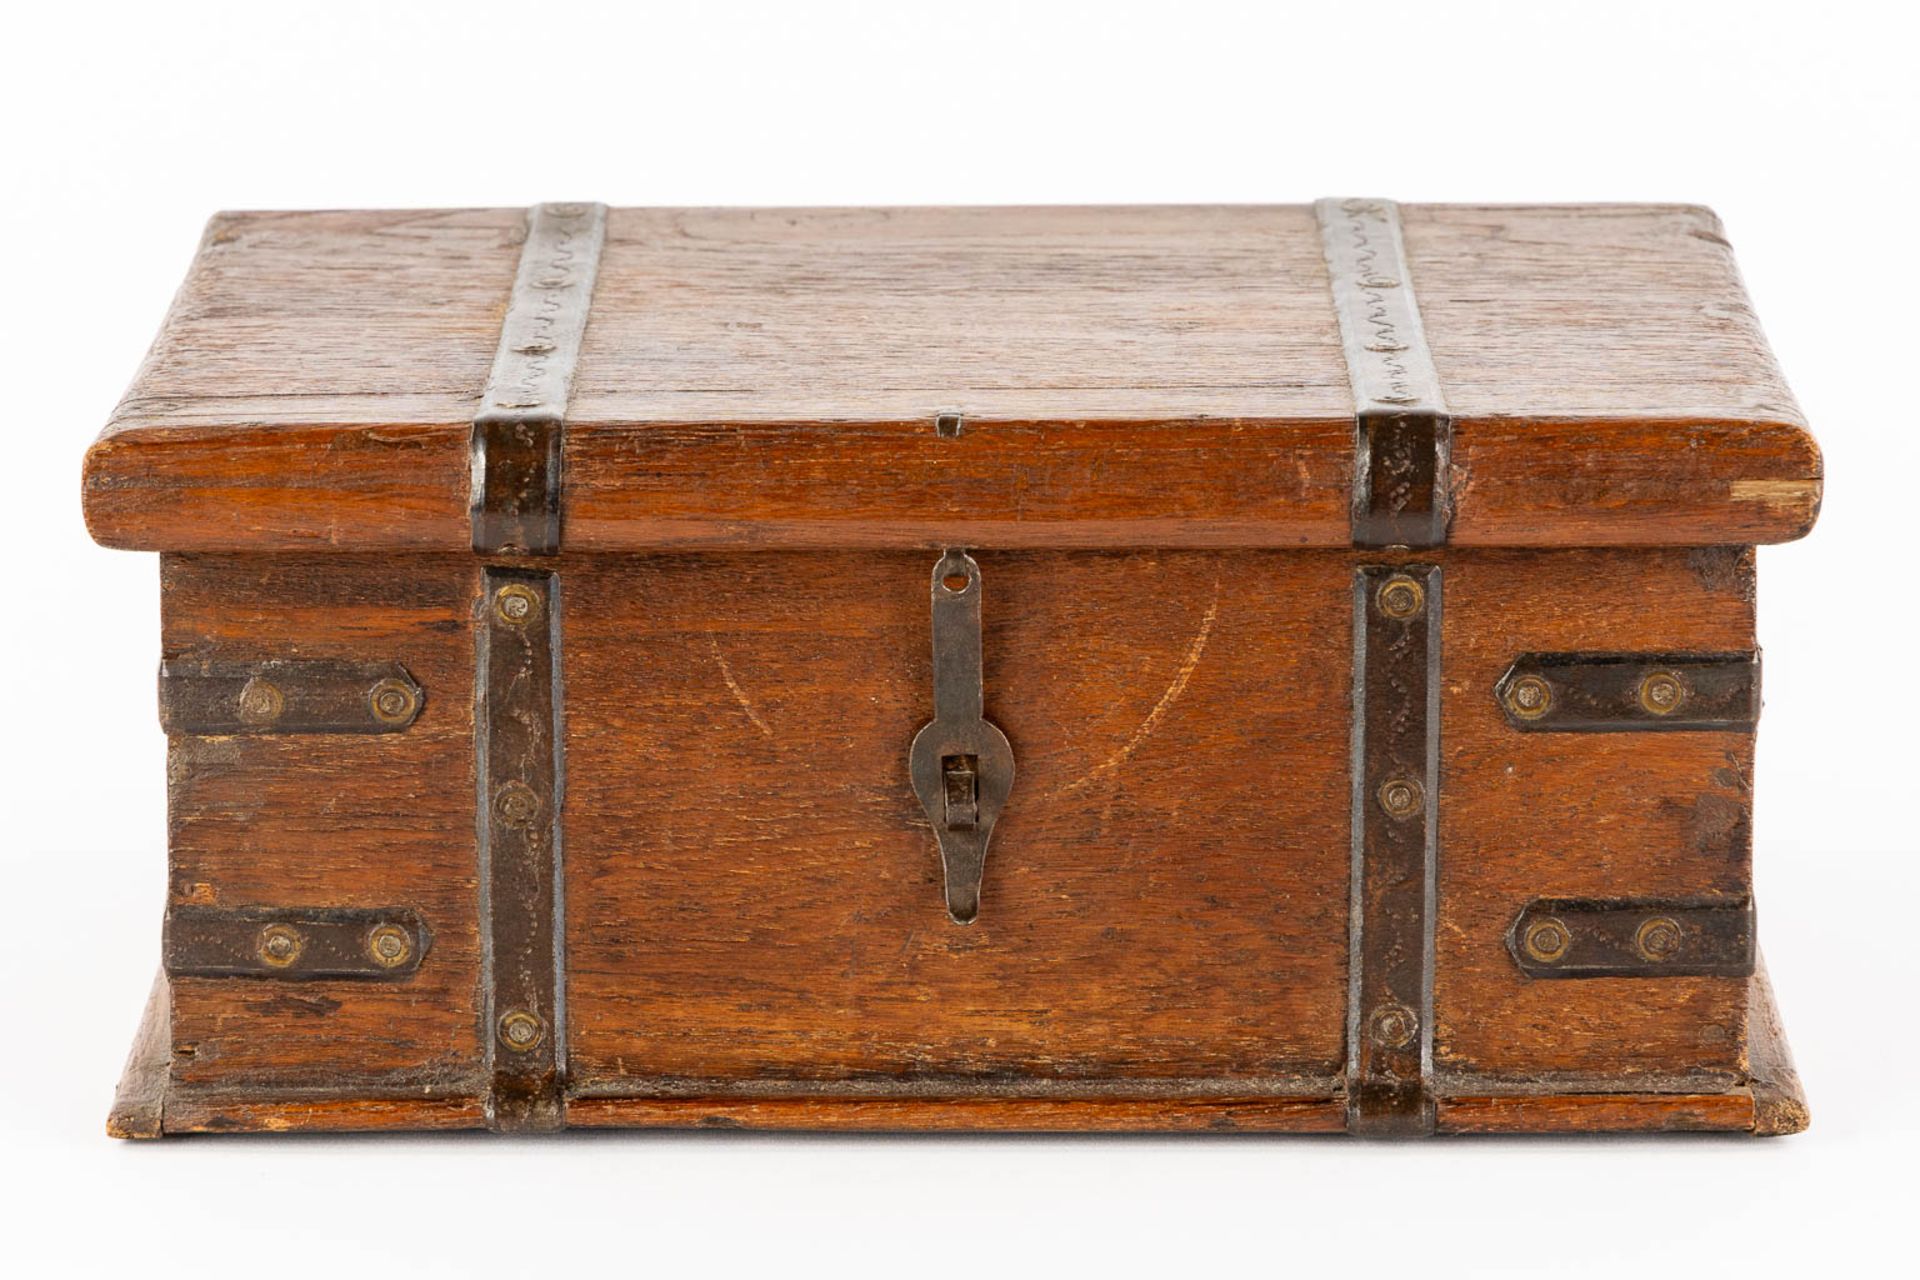 An antique money box or storage chest, oak and wrought iron, 19th C. (L:23 x W:31 x H:13 cm) - Bild 3 aus 13